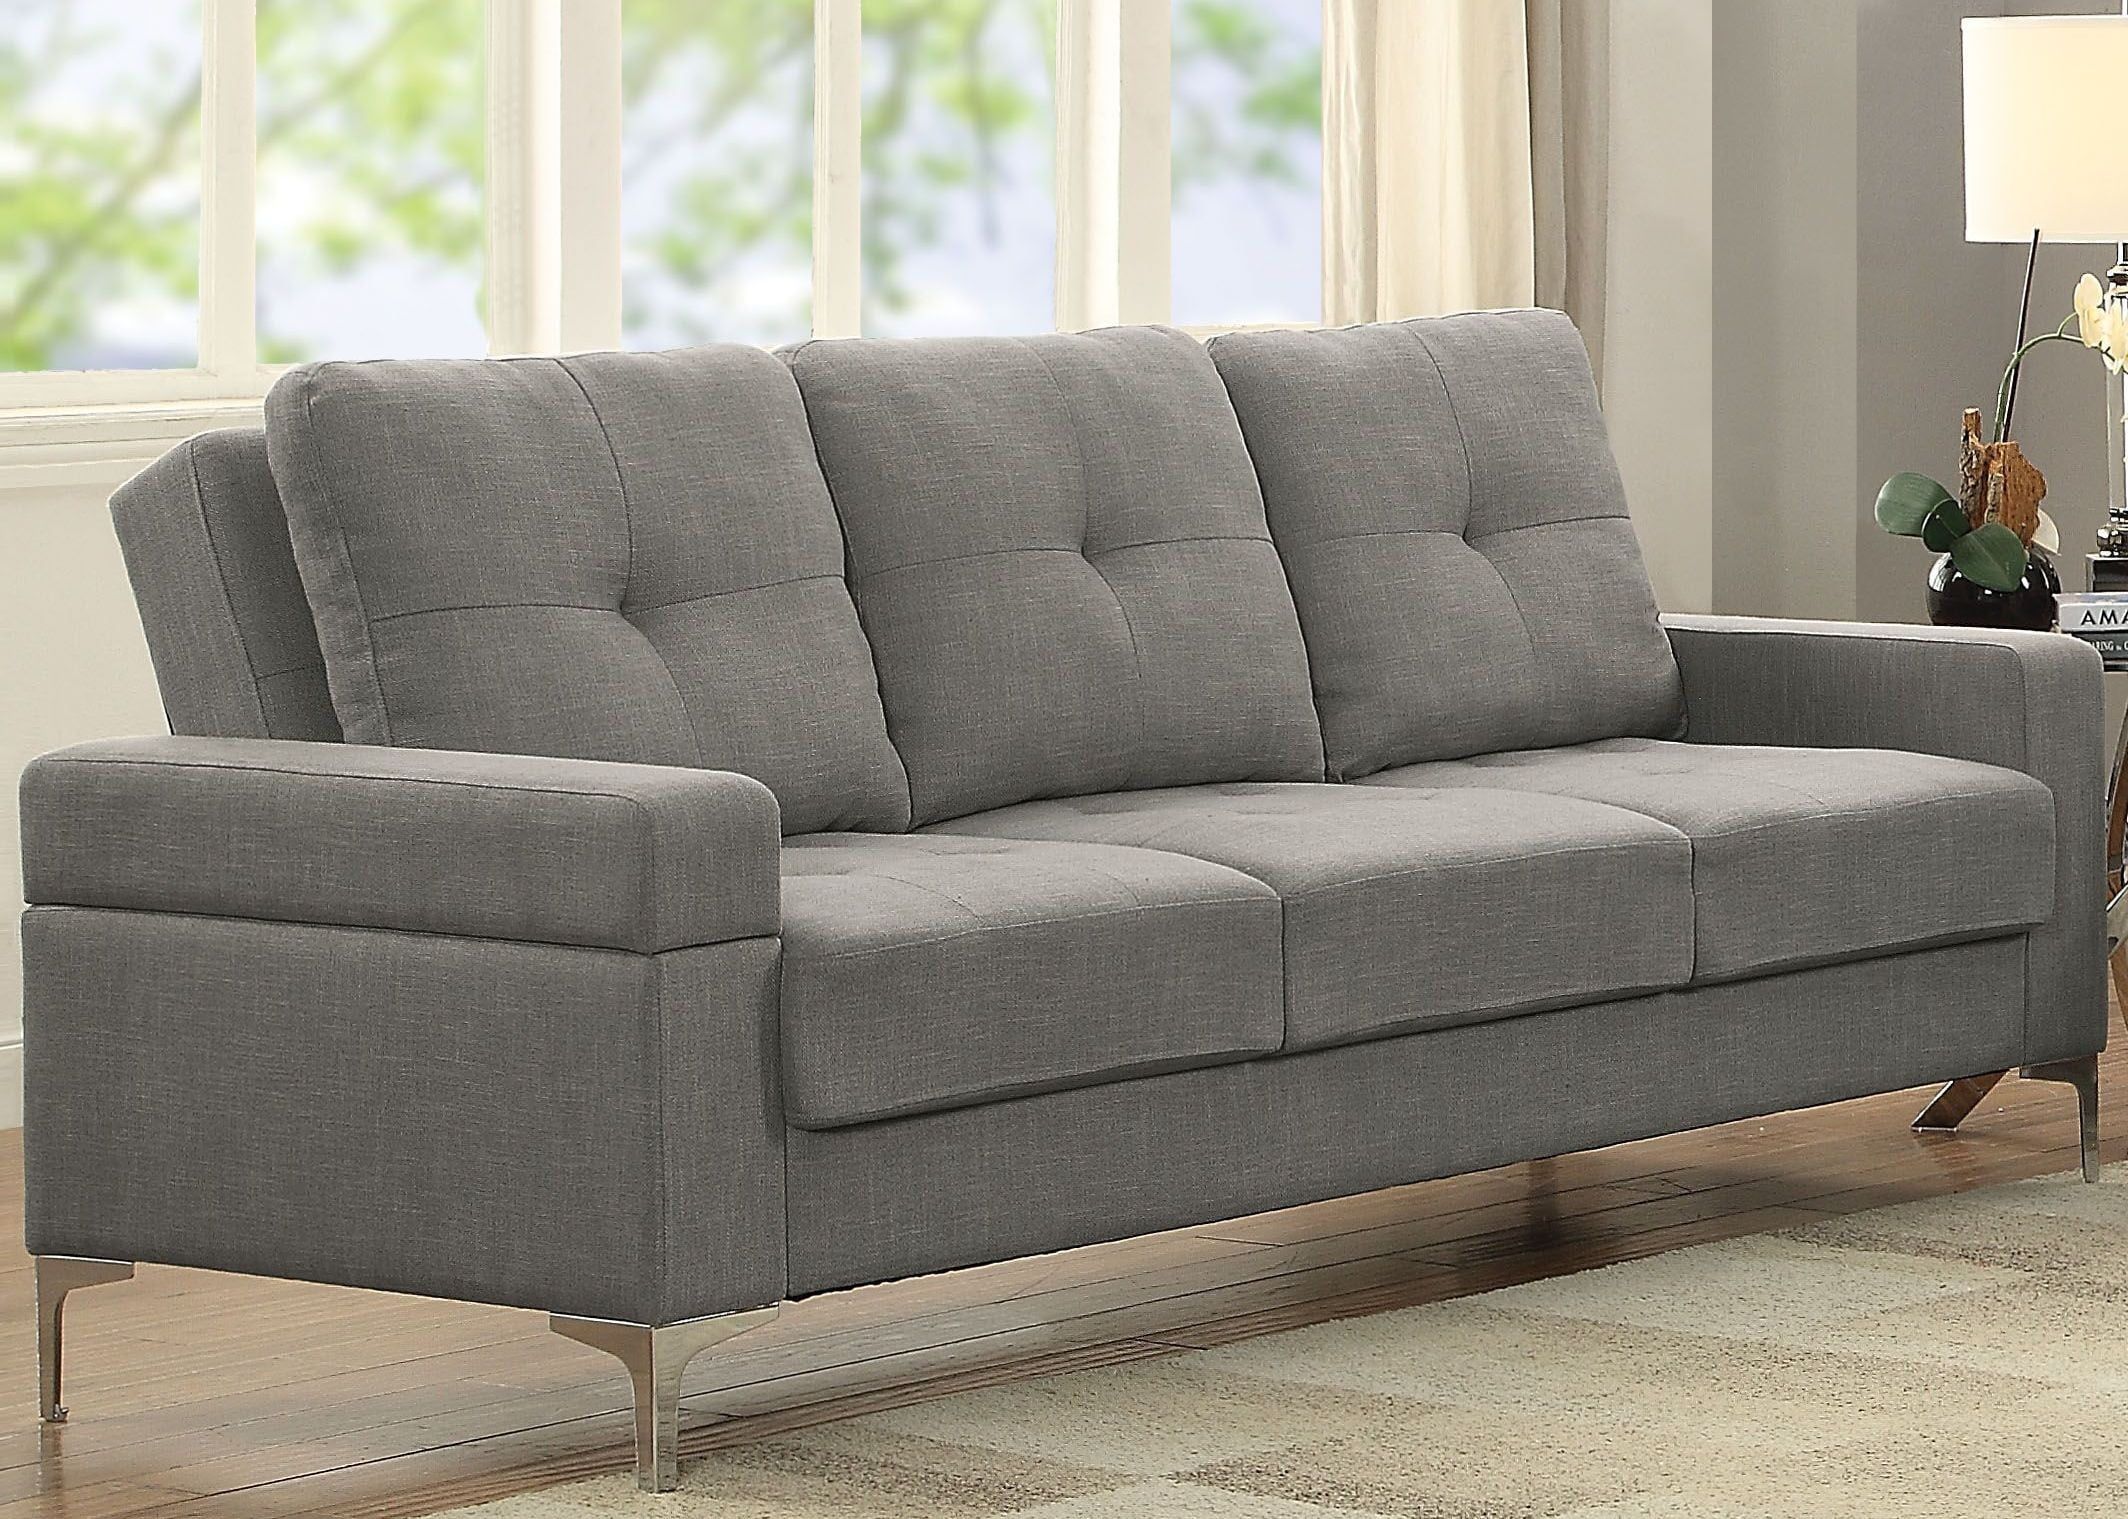 Dorian Gray Linen Adjustable Sofa From Acme | Coleman Furniture Regarding Gray Linen Sofas (Gallery 9 of 20)